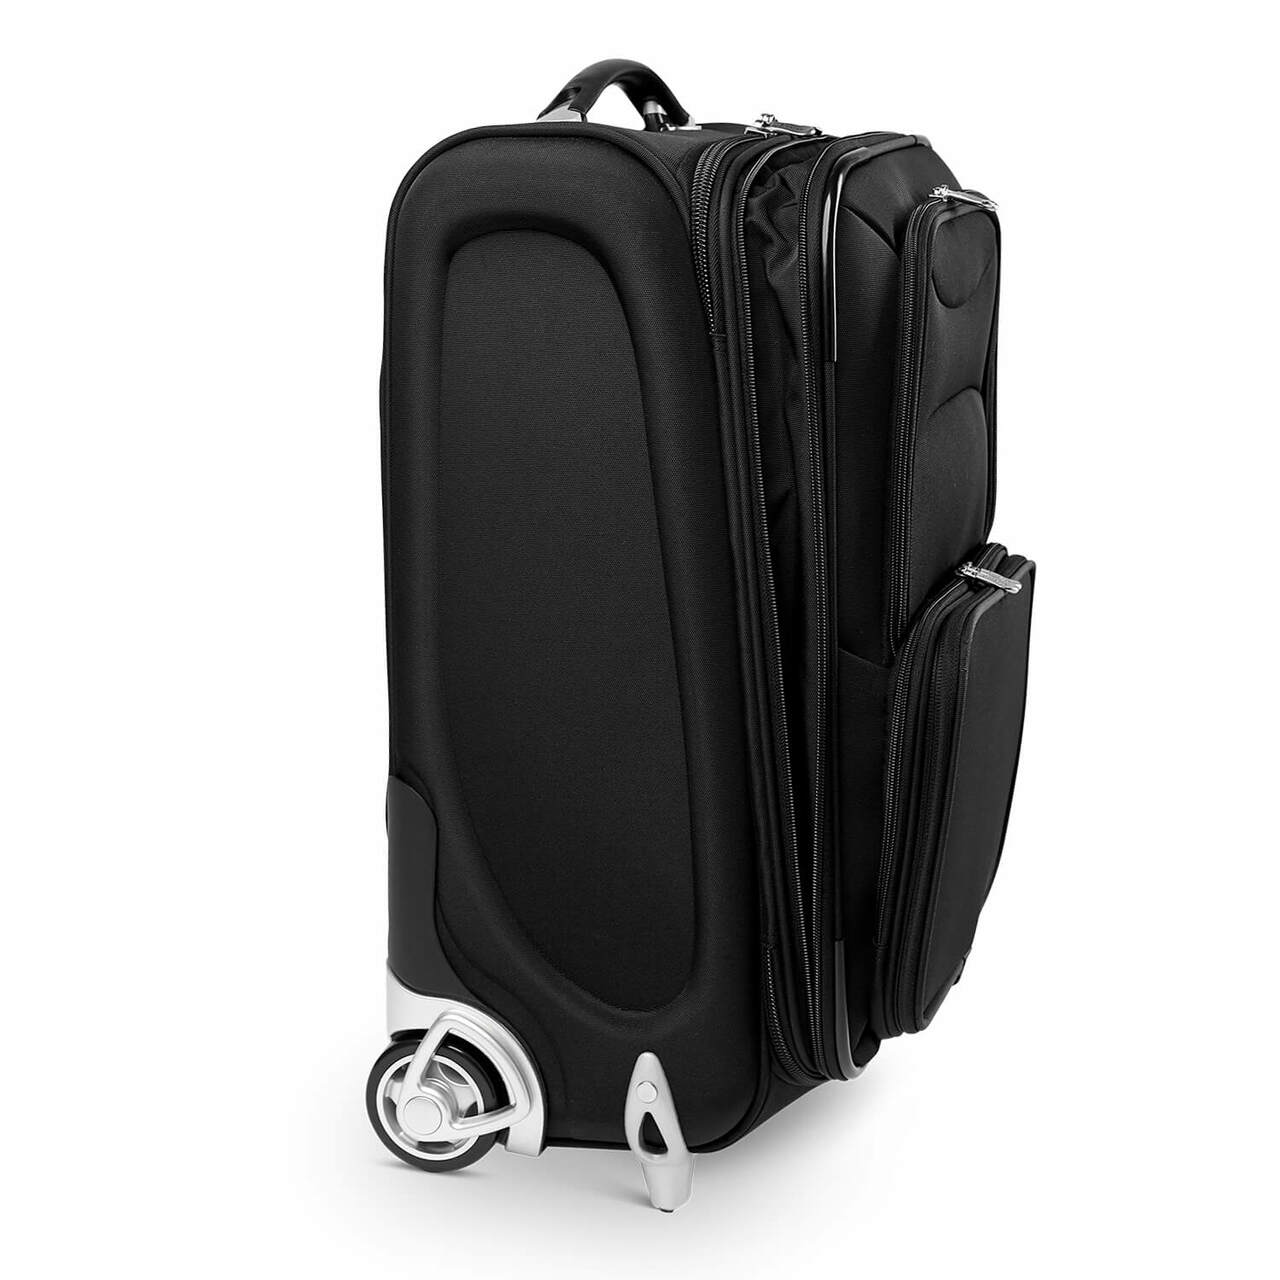 Trail Blazers Carry On Luggage | Portland Trail Blazers Rolling Carry On Luggage